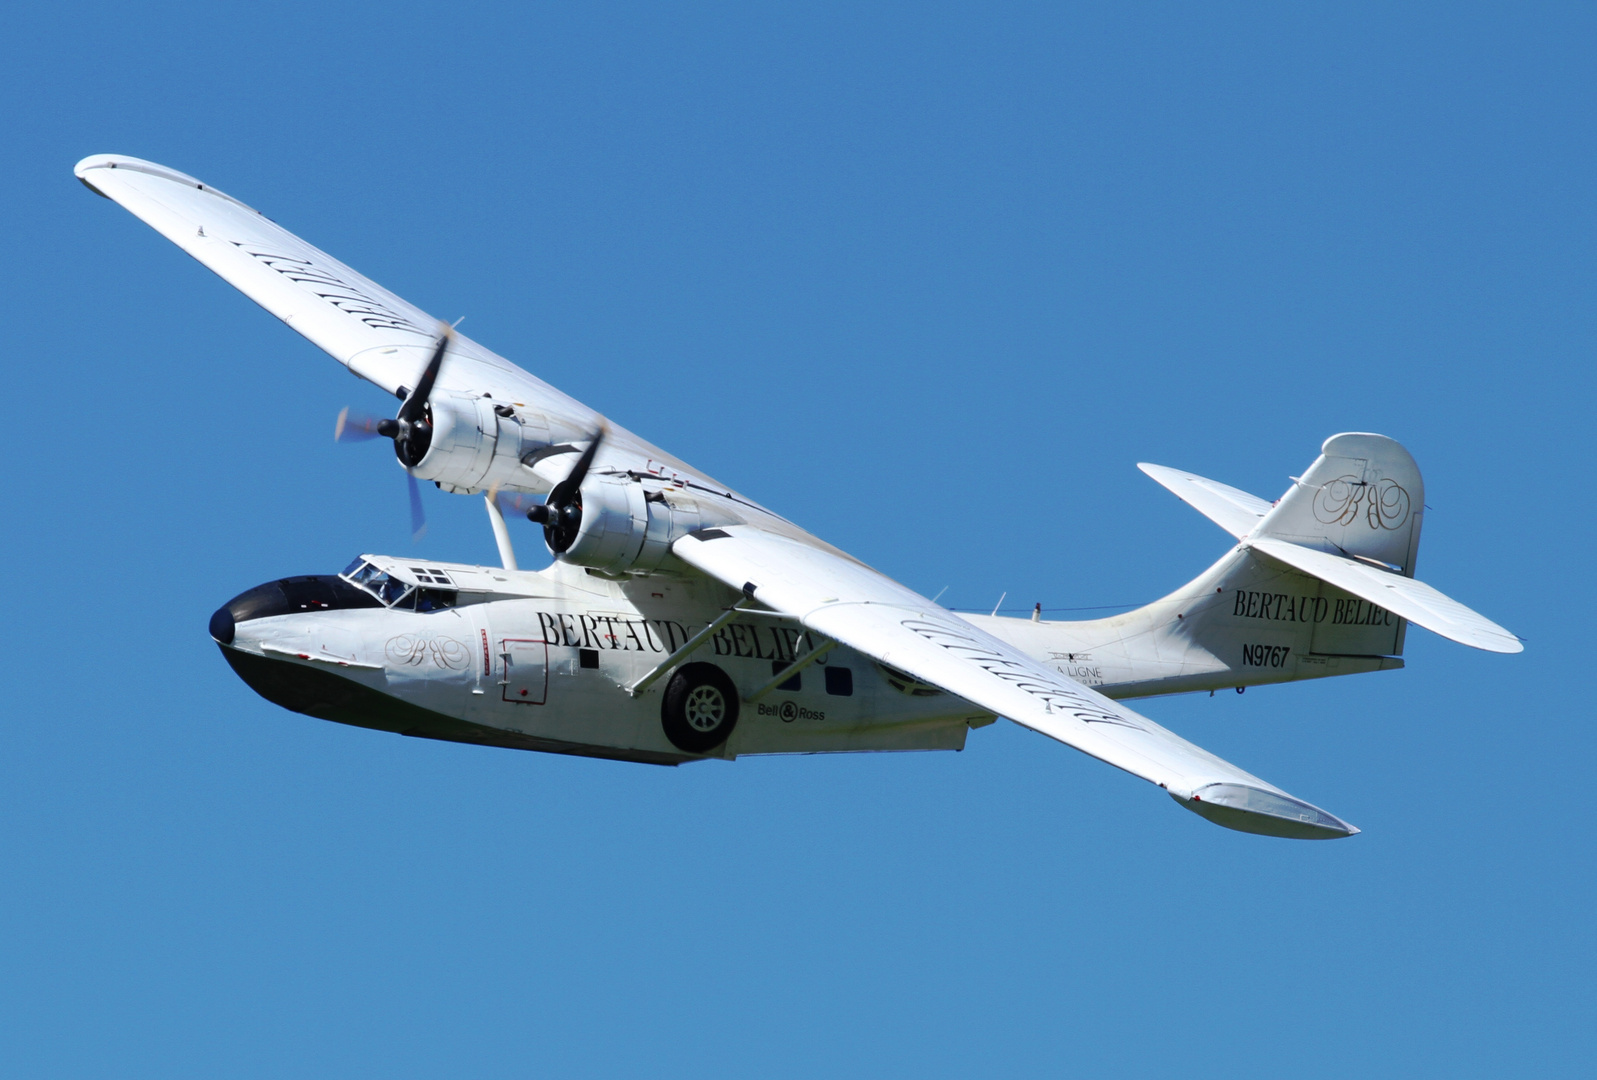 PBY-5A Catalina